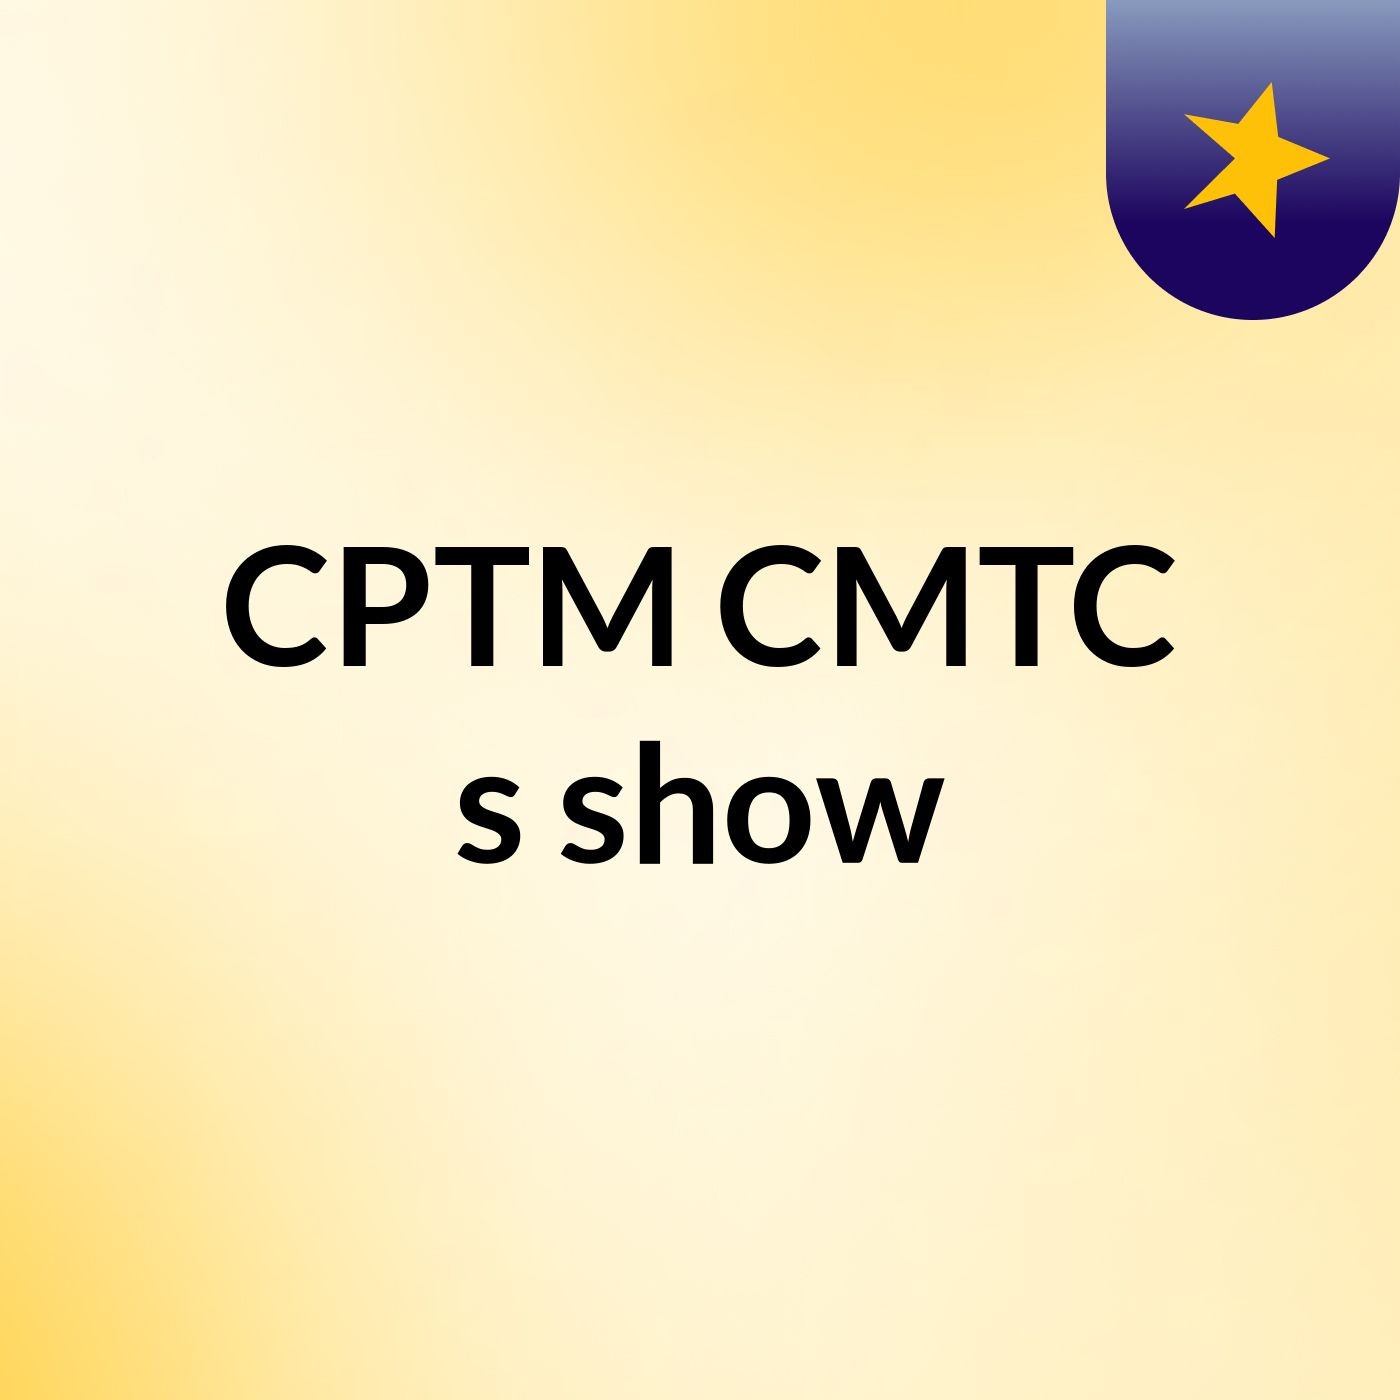 CPTM CMTC's show